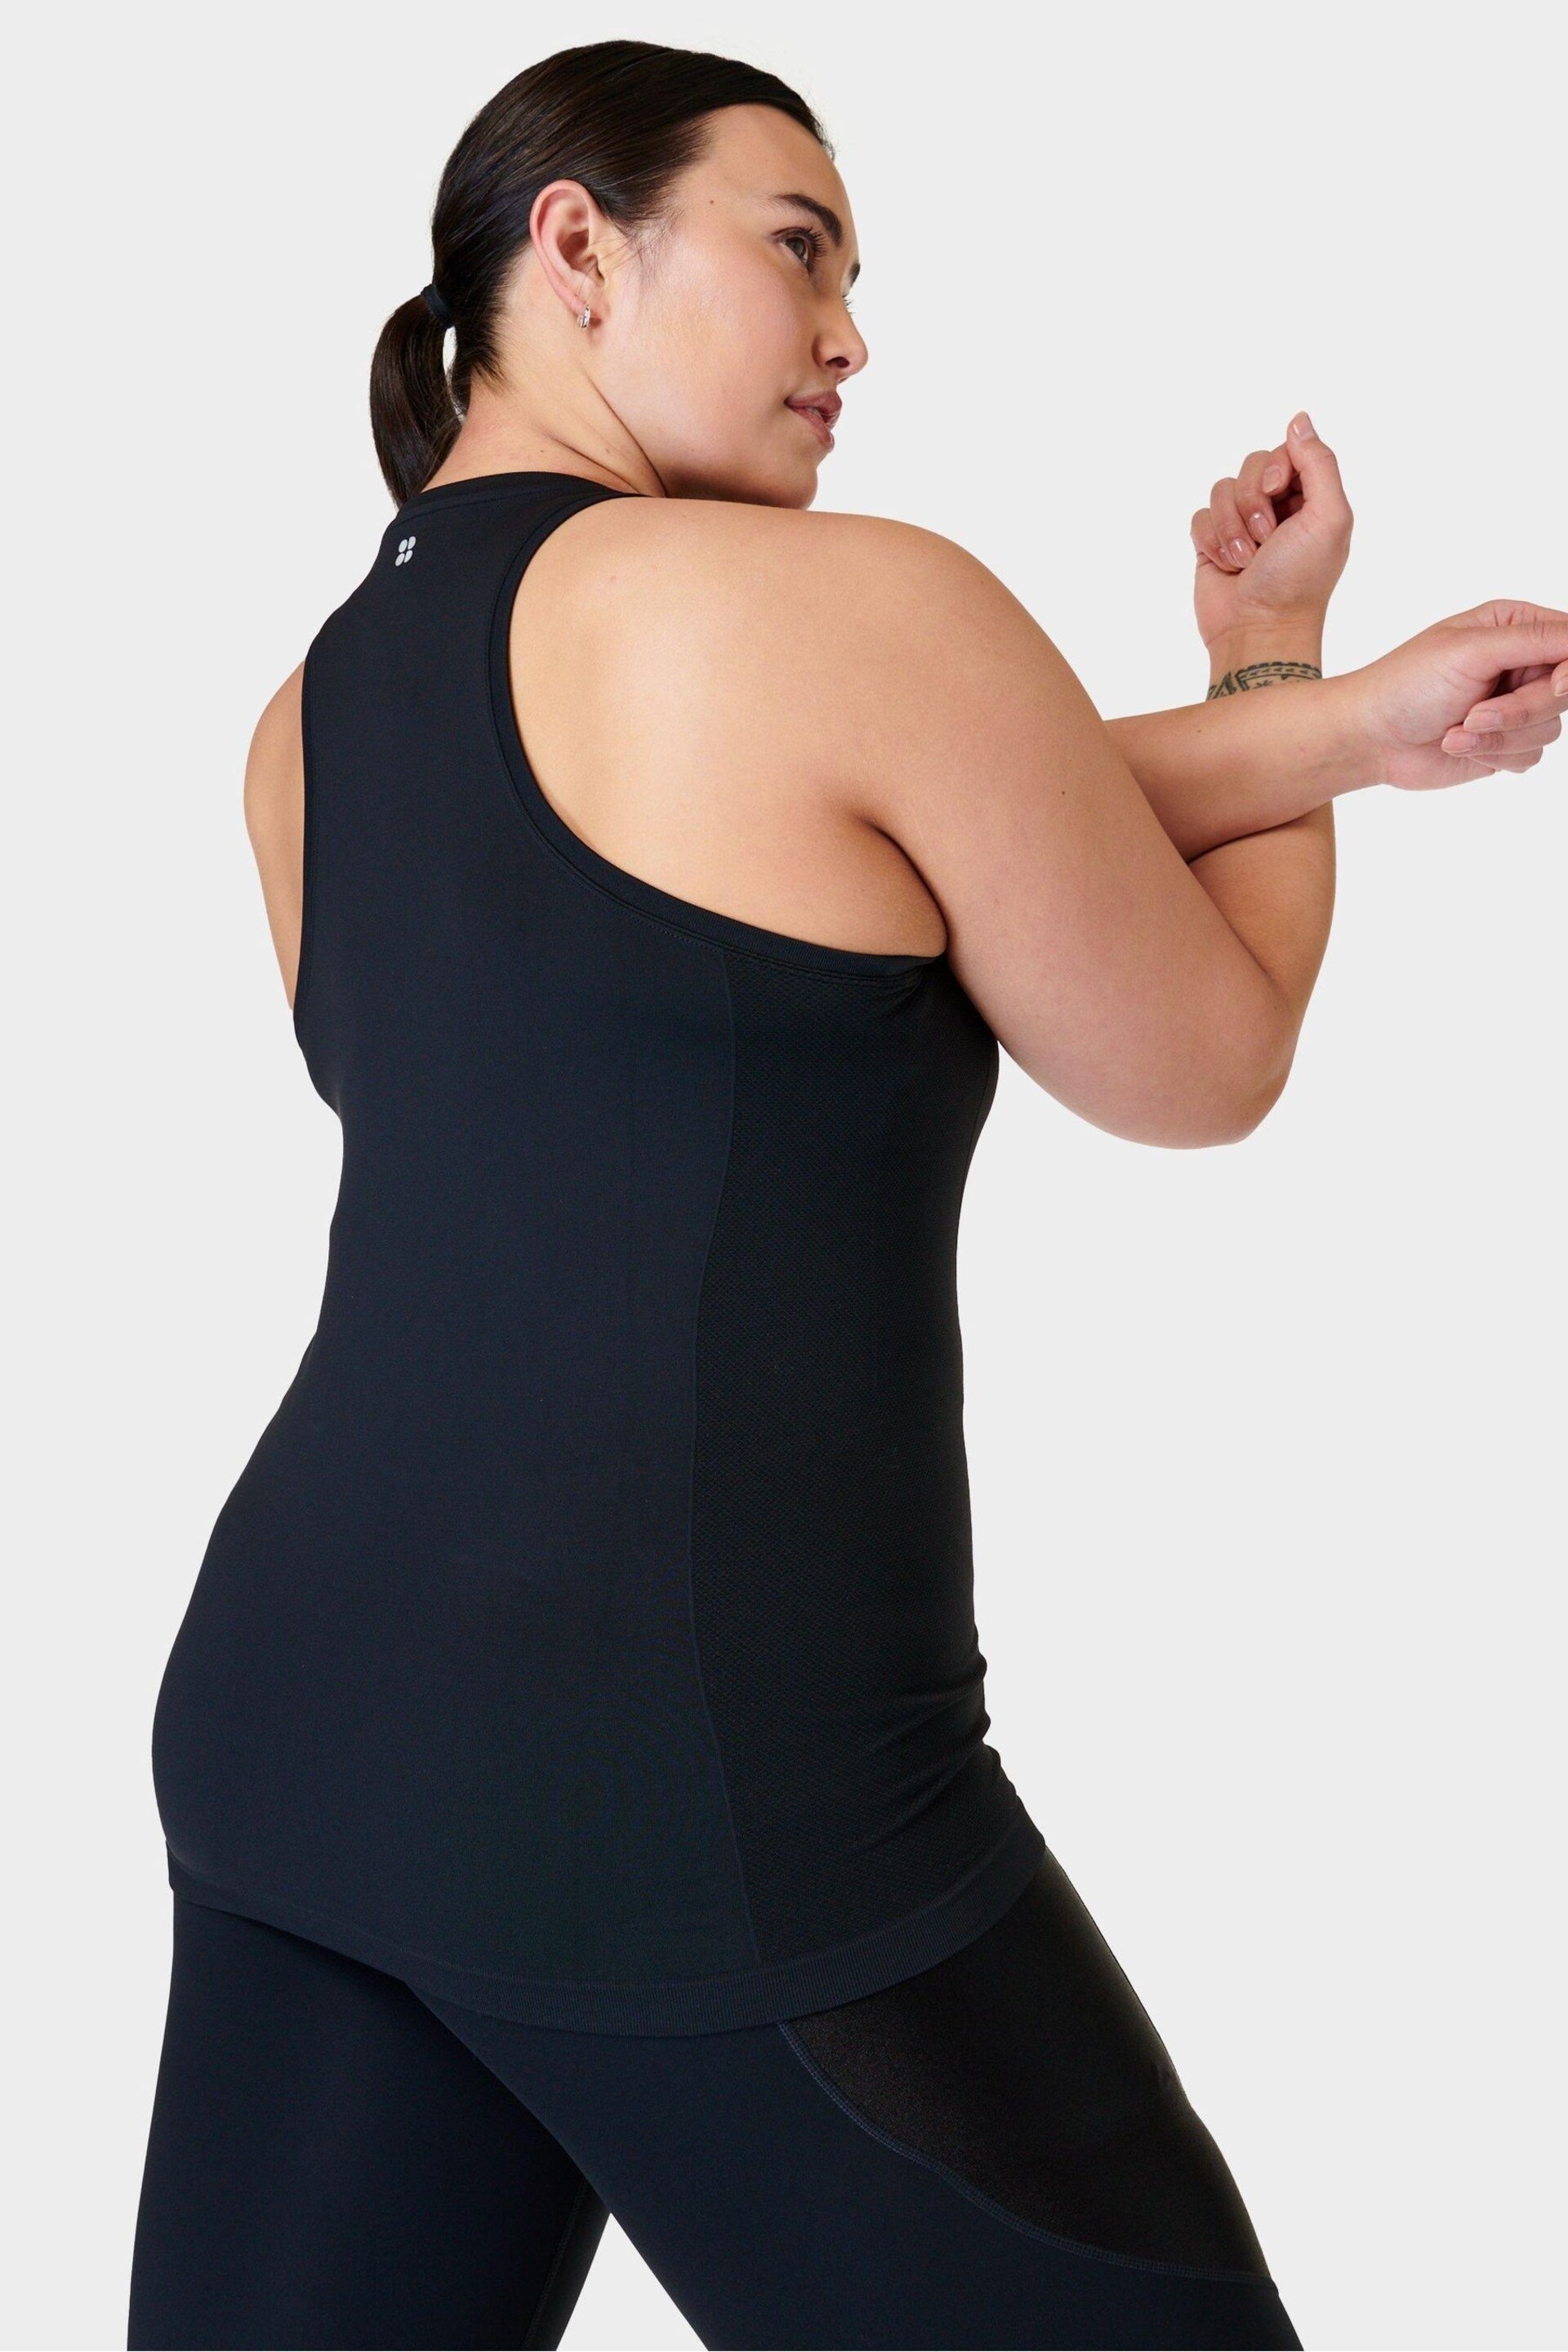 Sweaty Betty Black Athlete Seamless Workout Tank Top - Image 3 of 6